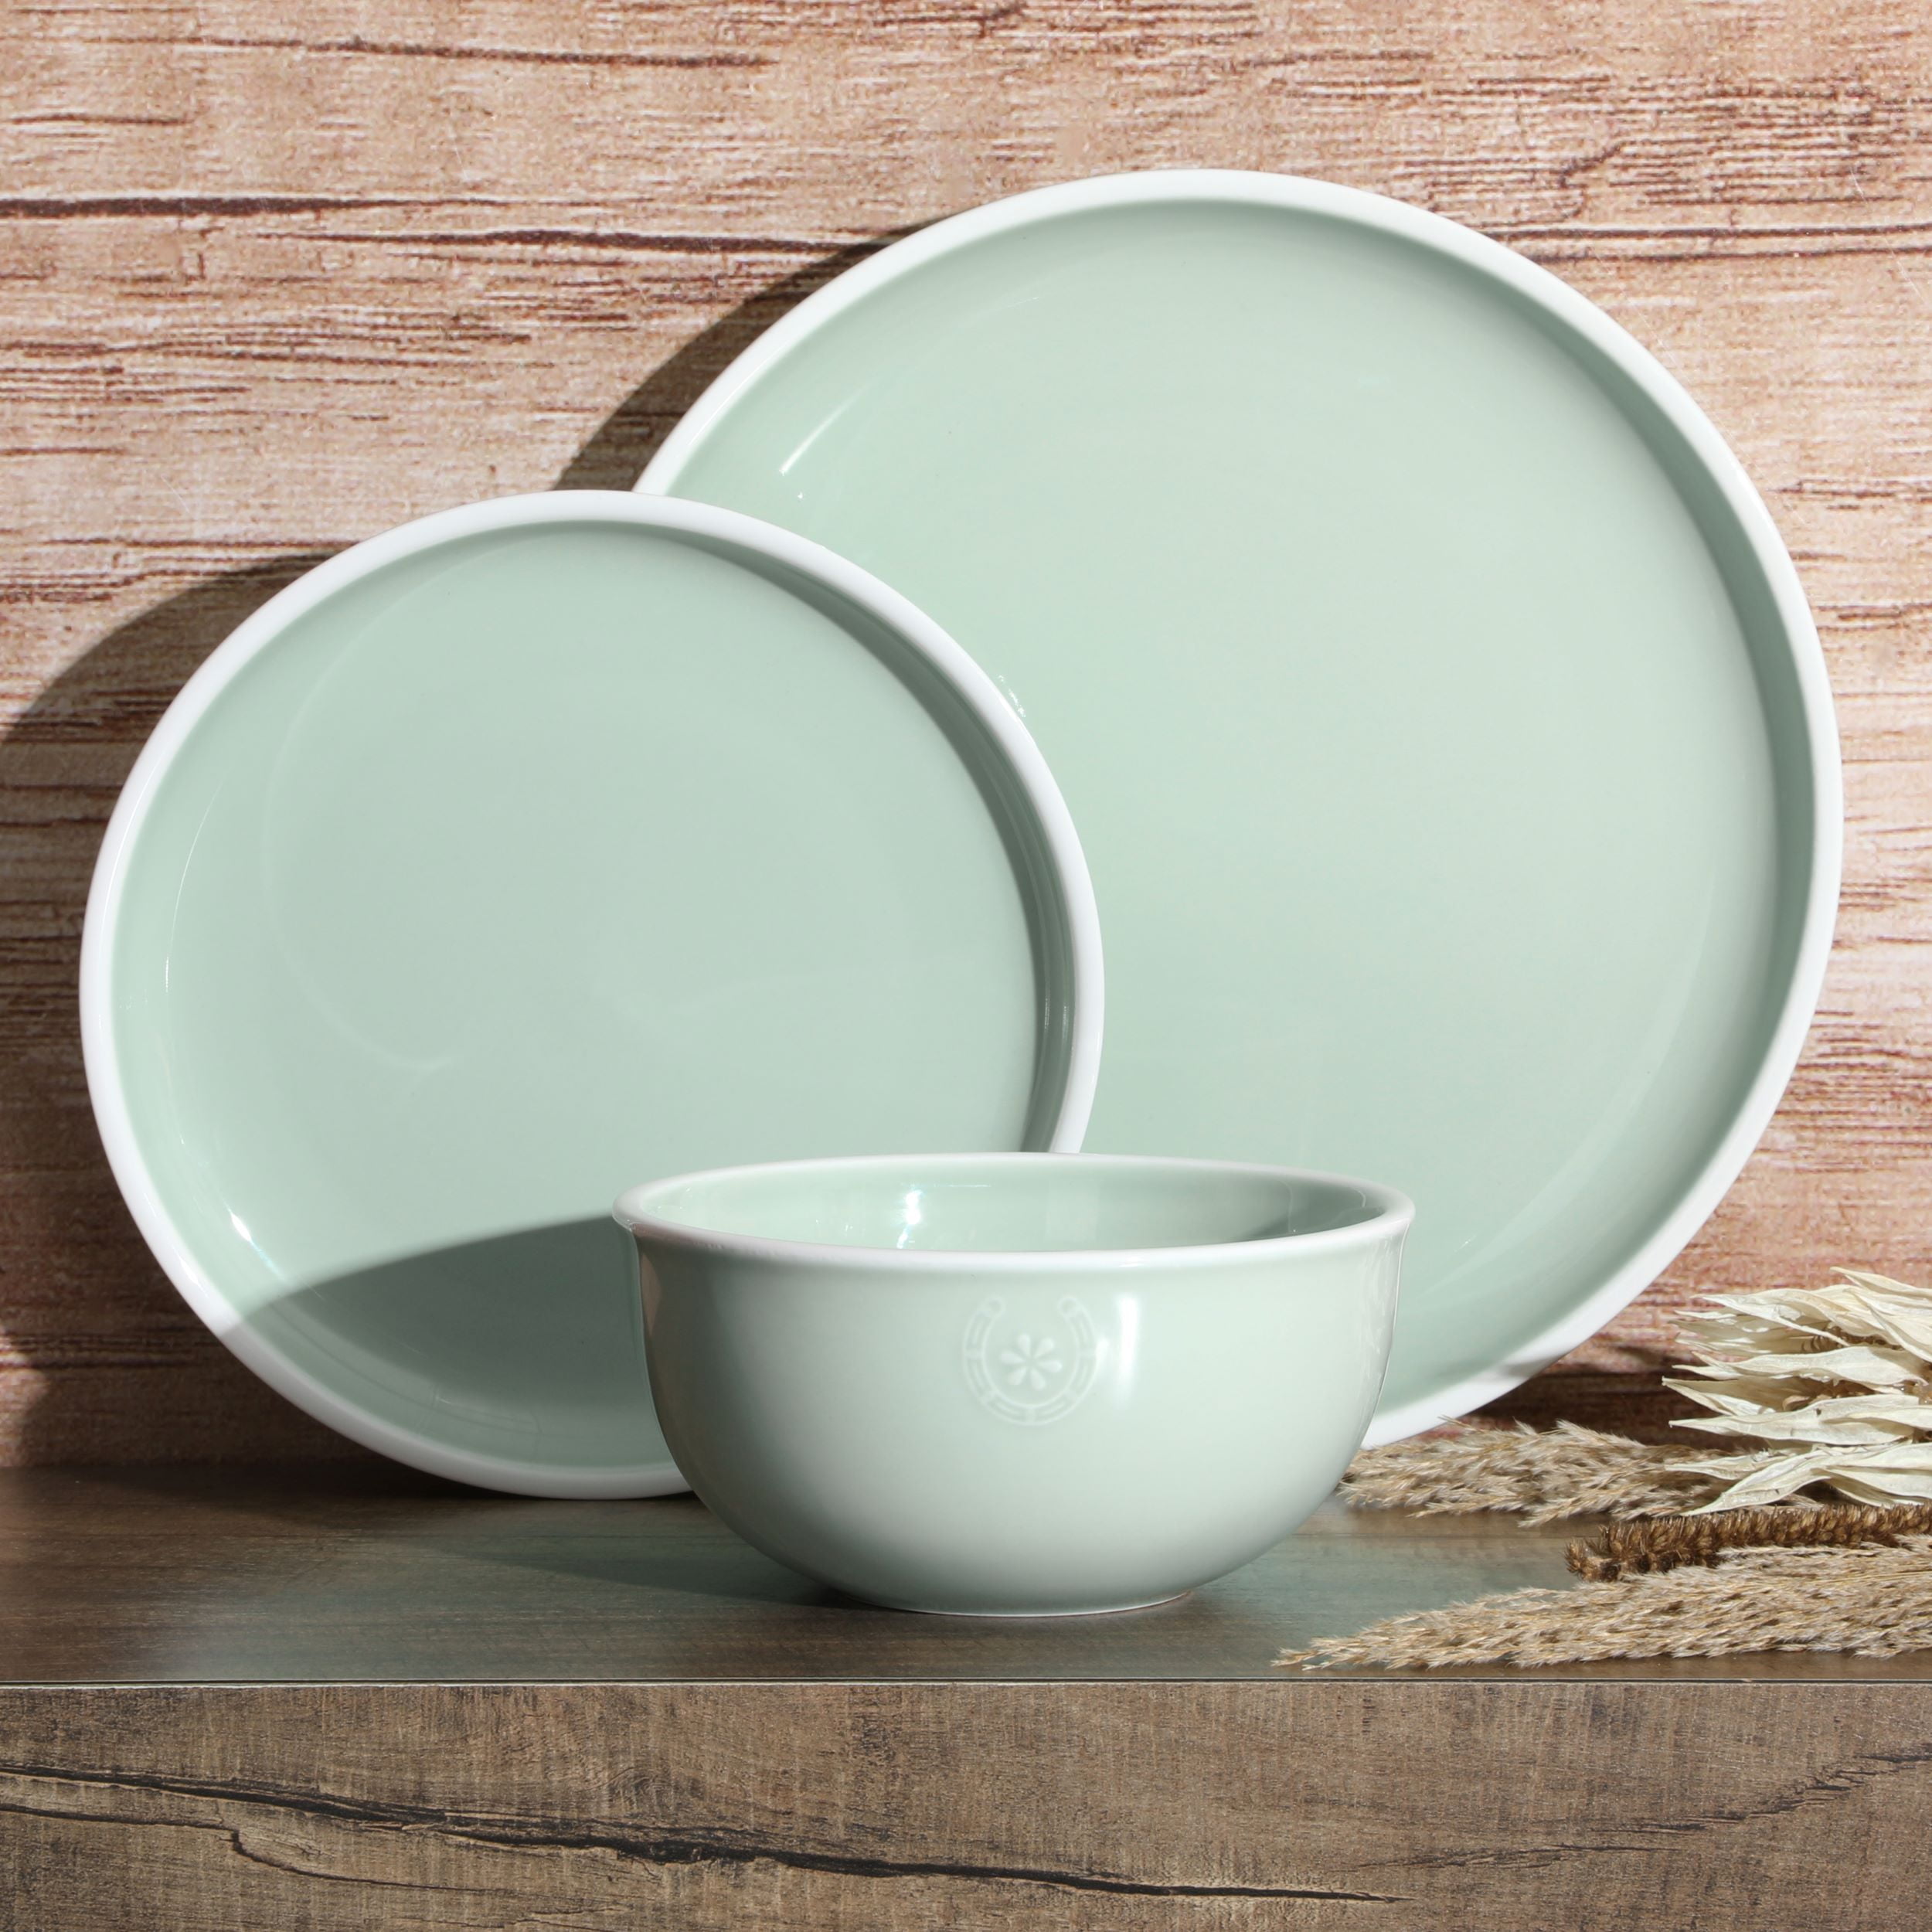 How to Make Elegant Pottery Dinnerware - Using the WA2 